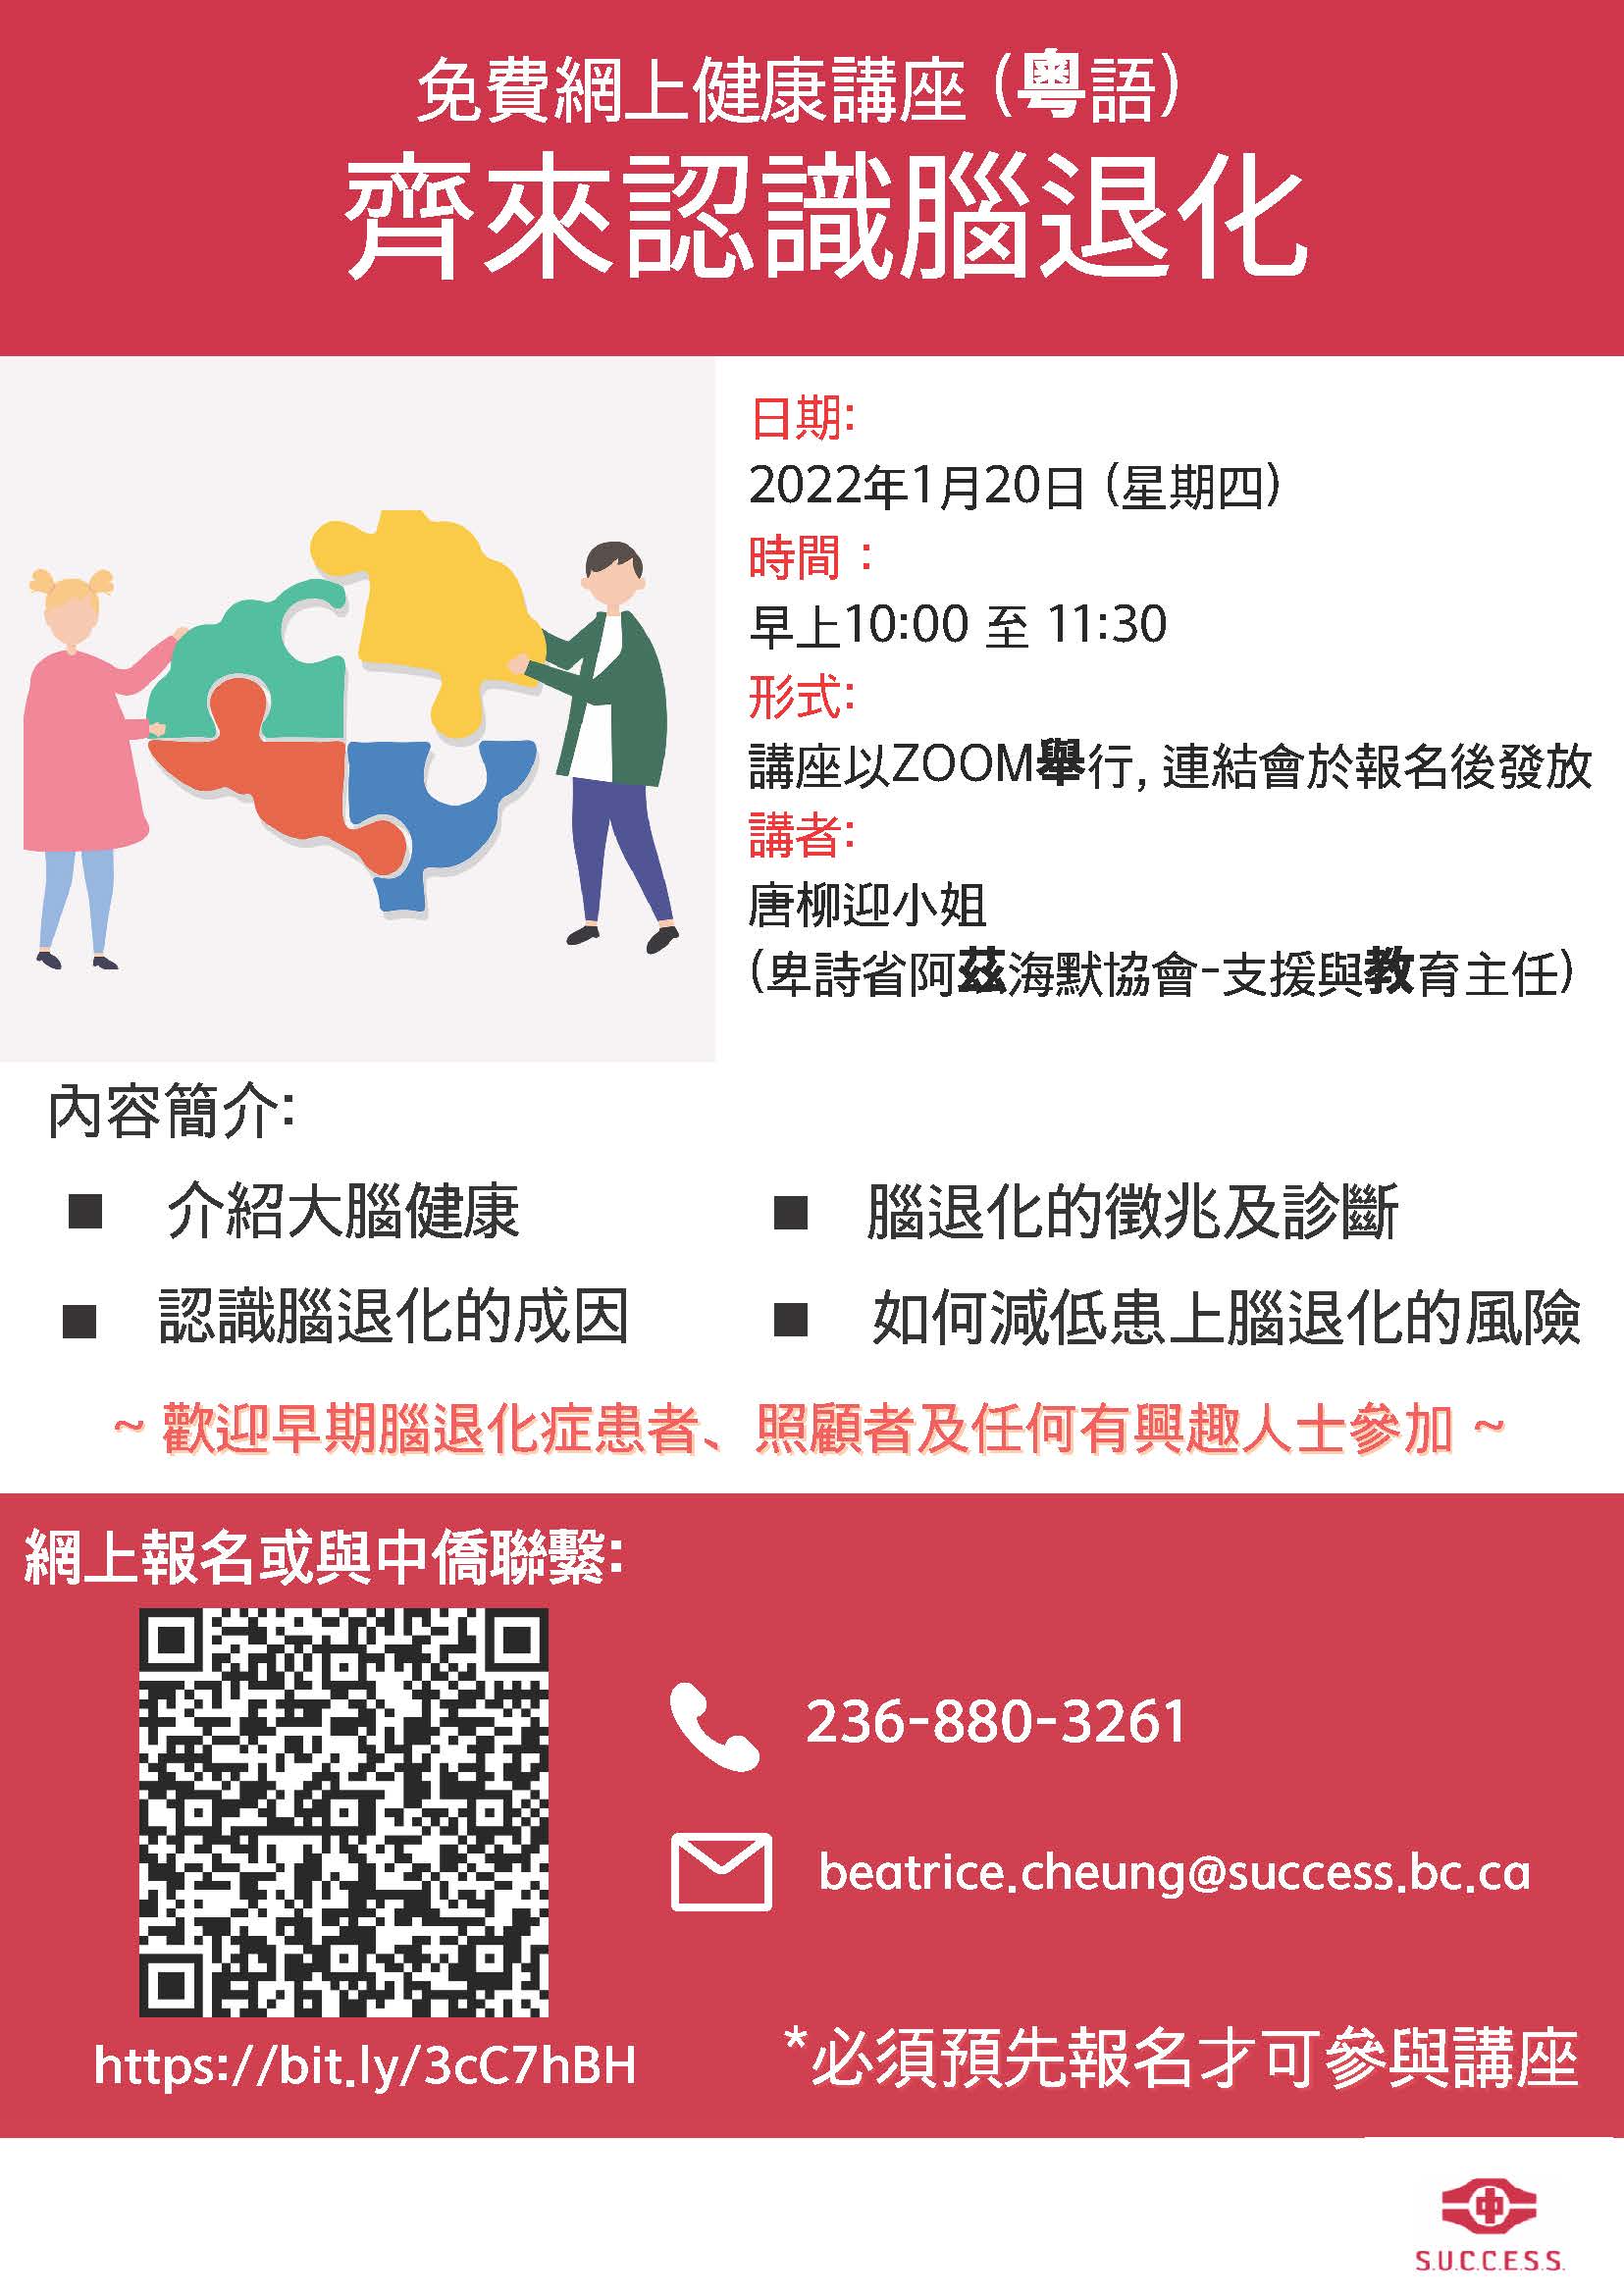 SUCCESS dementia workshop in Cantonese 2022-01-20